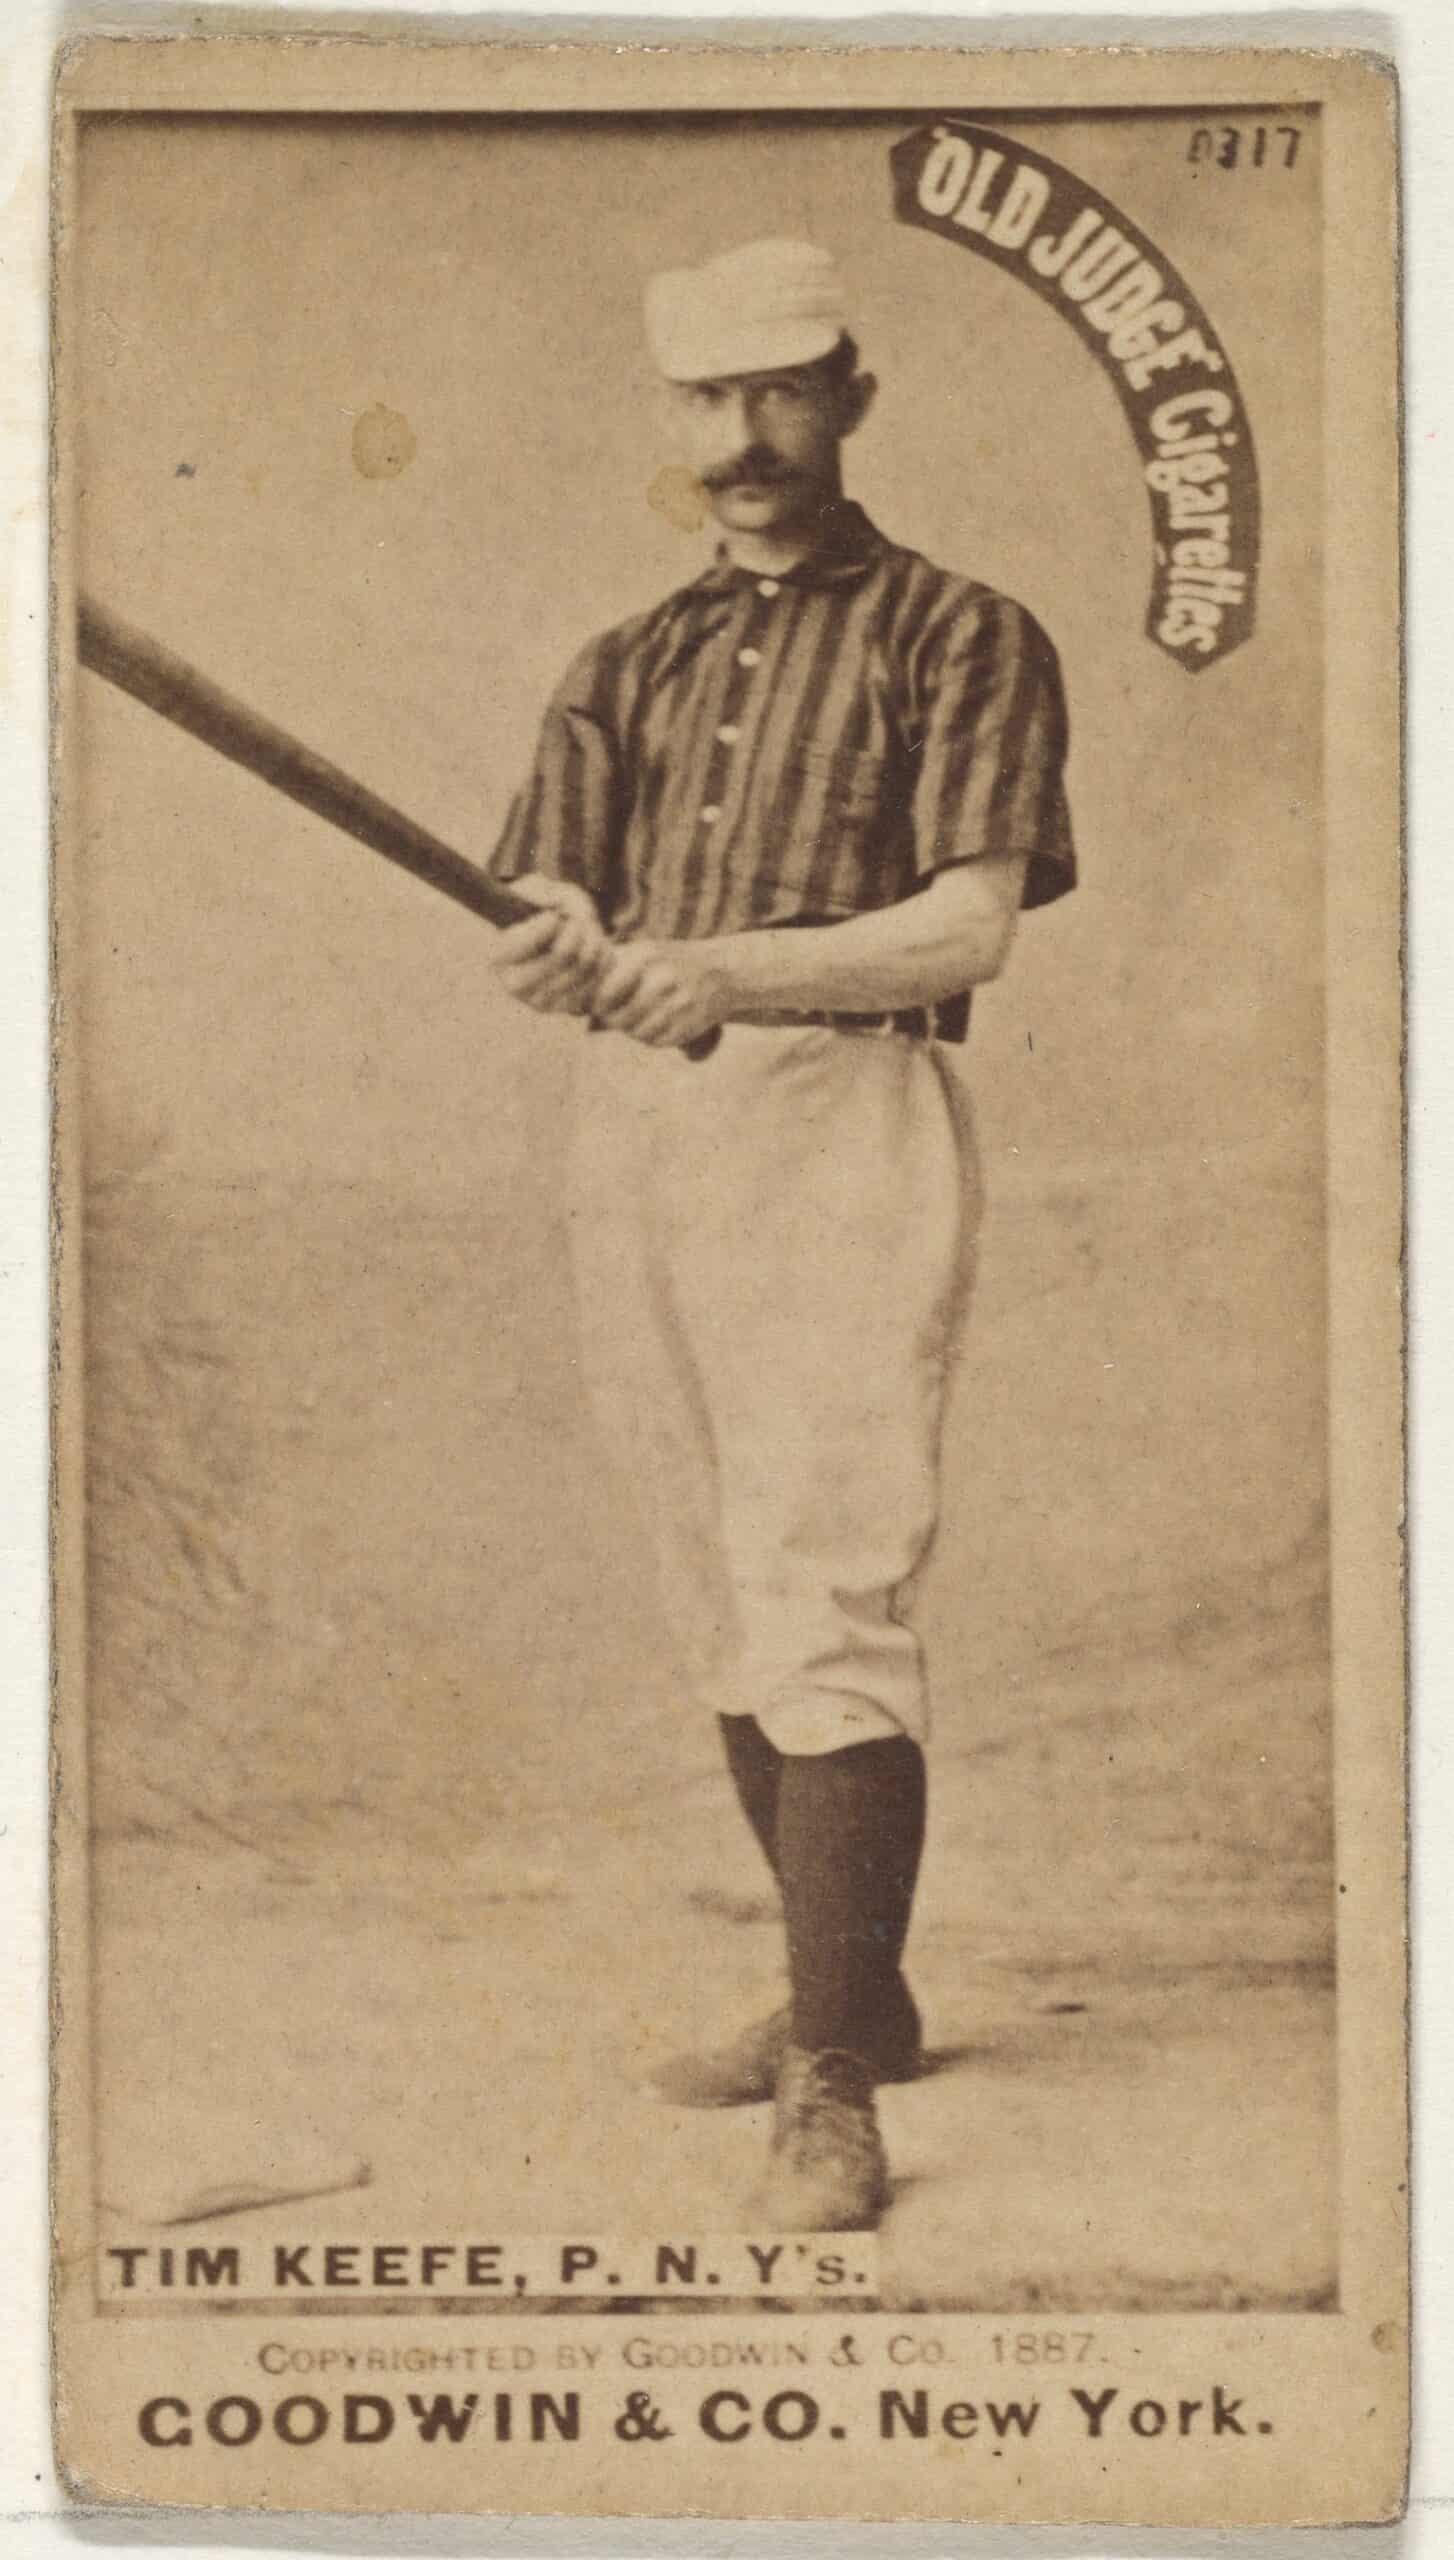 Tim Keefe baseball card